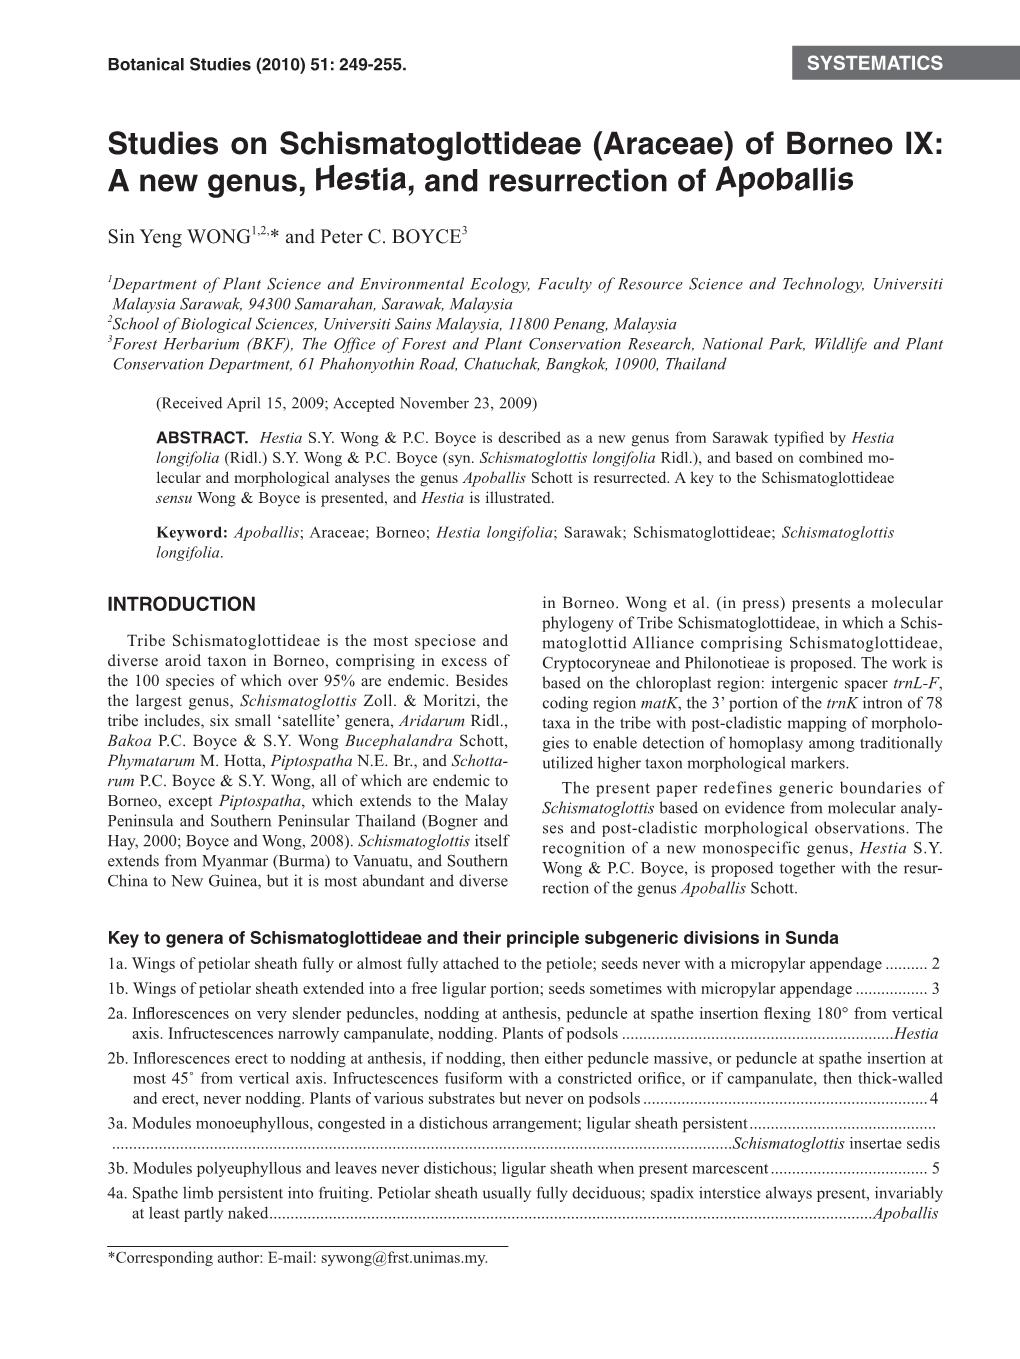 Studies on Schismatoglottideae (Araceae) of Borneo IX: a New Genus, Hestia, and Resurrection of Apoballis